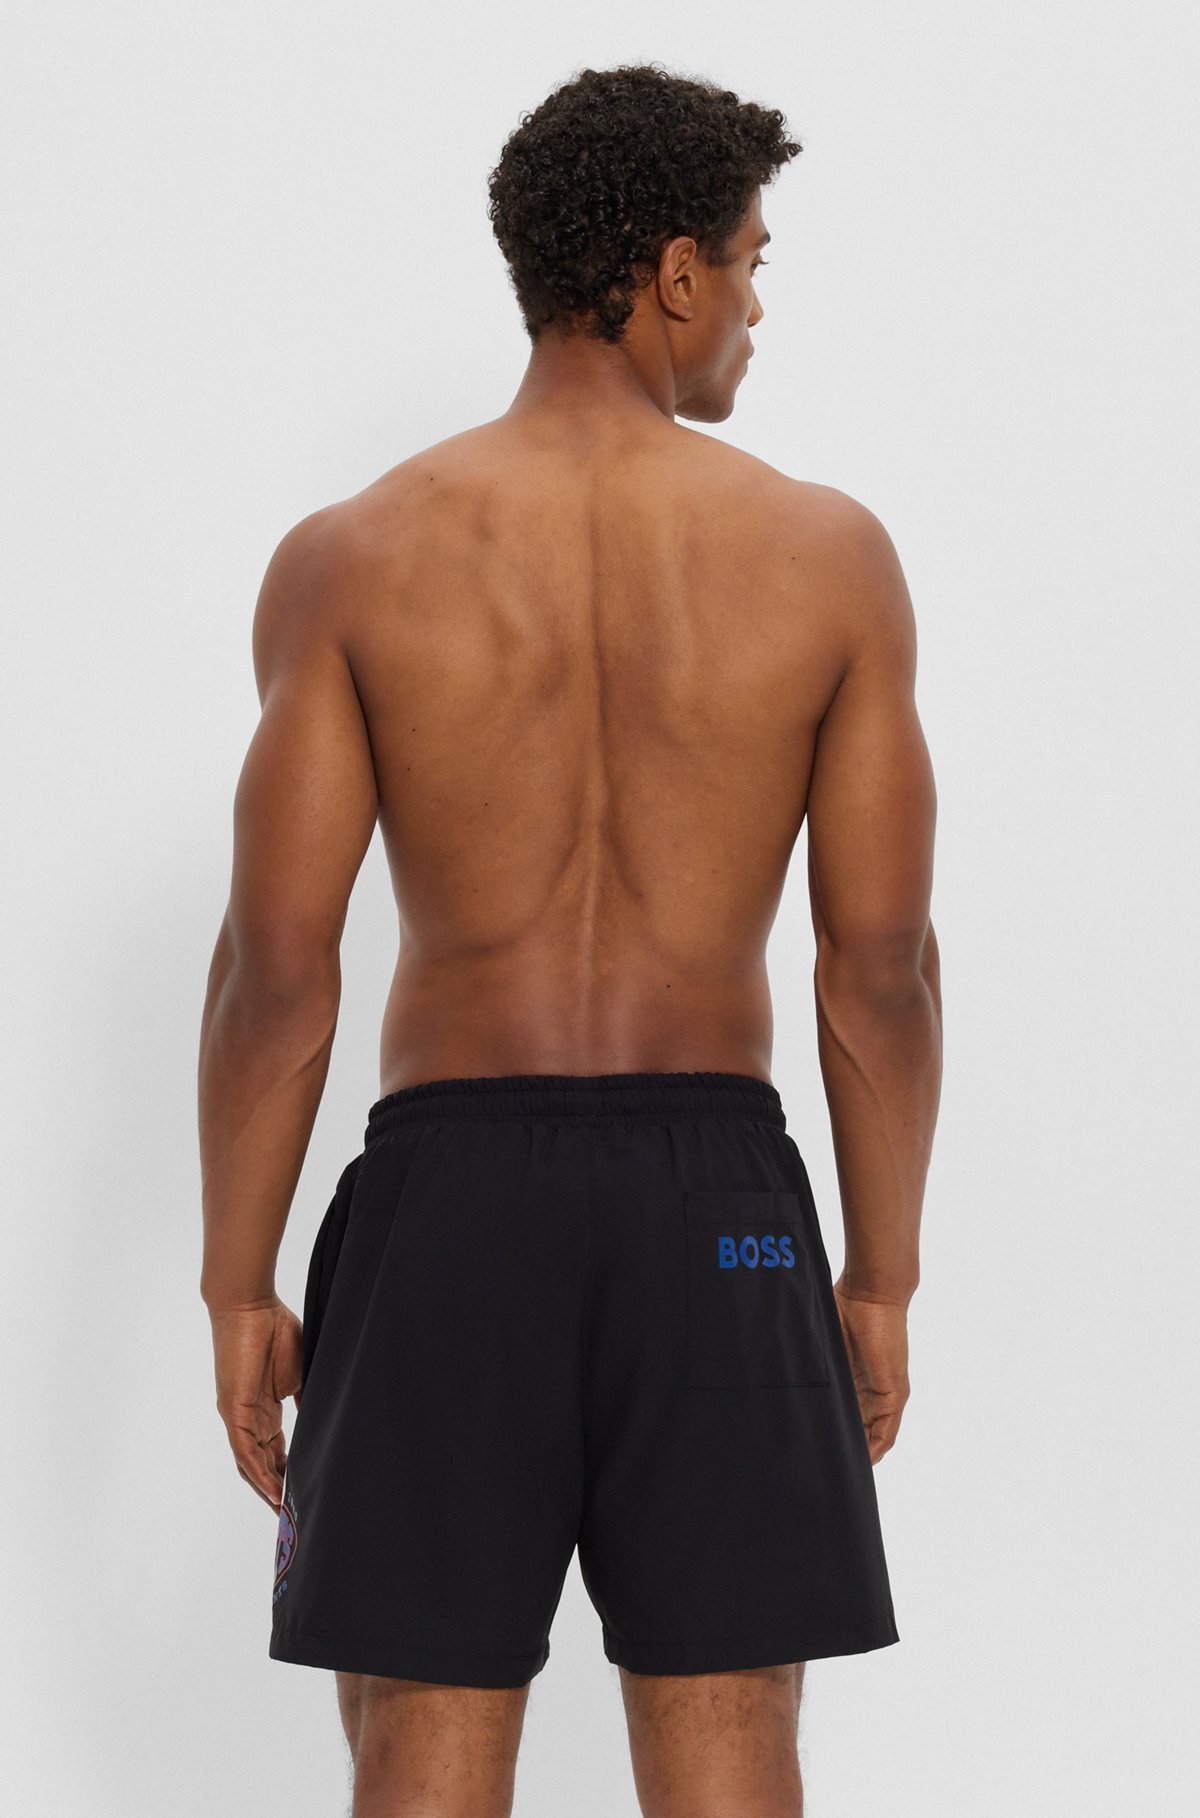 BOSS x NFL quick-dry swim shorts with collaborative branding, Giants